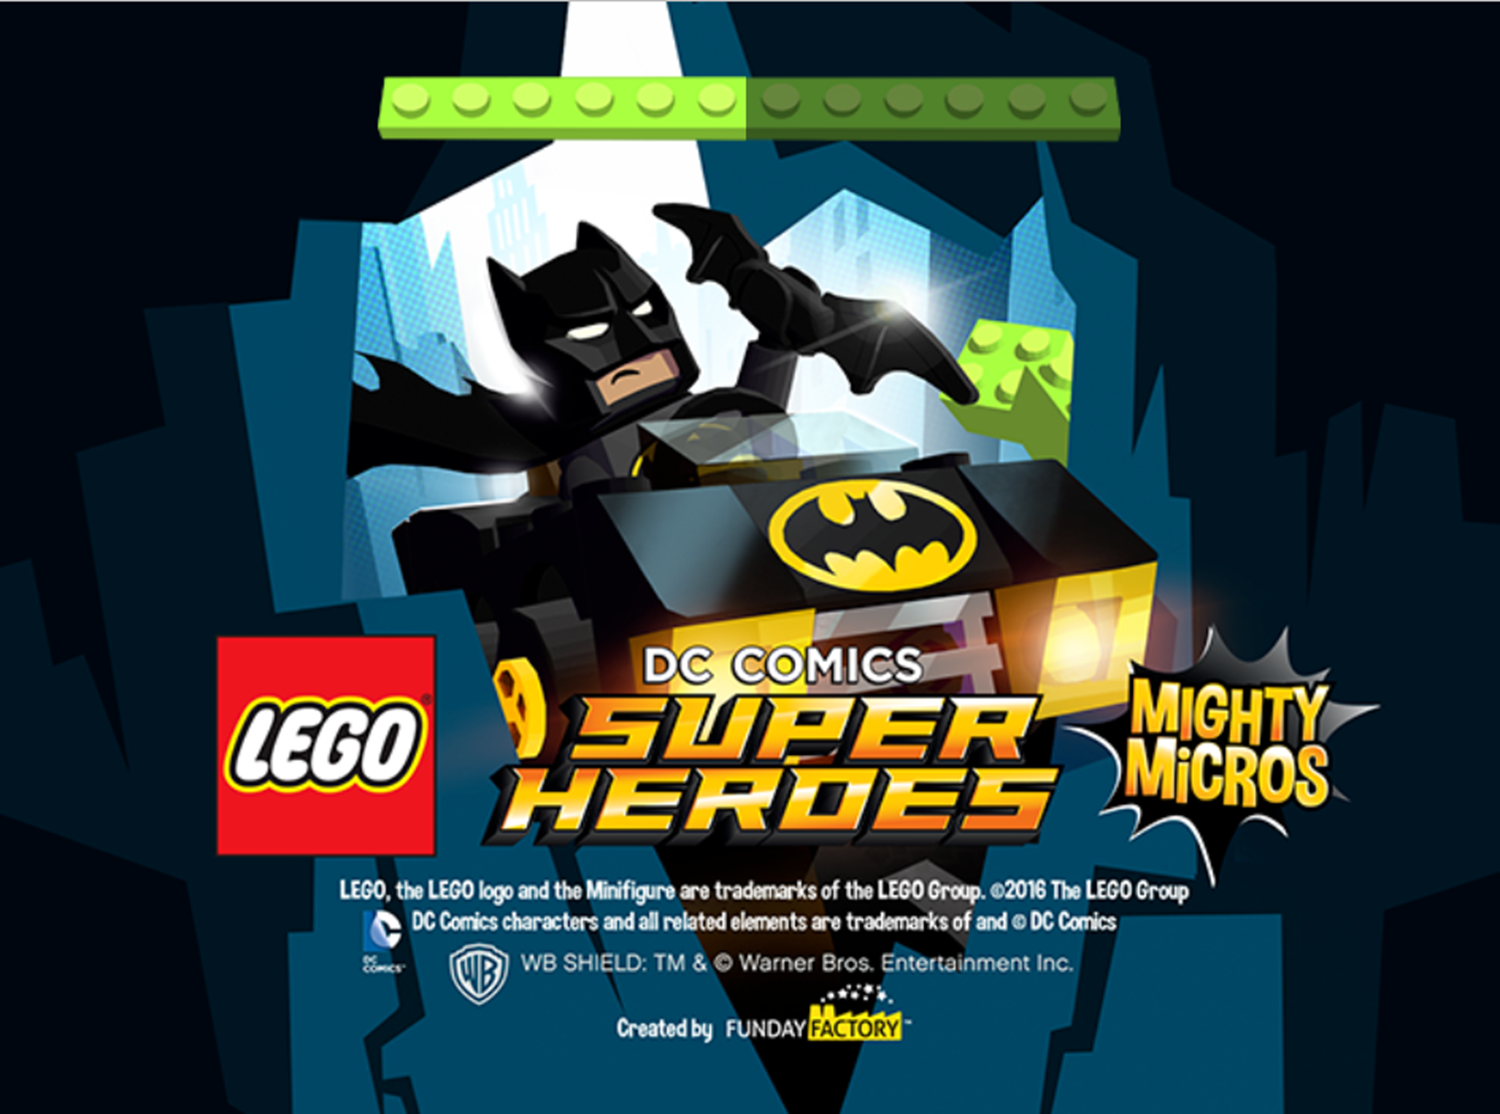 LEGO DC Comics Super Heroes Mighty Micros Game Welcome Screen Screenshot.